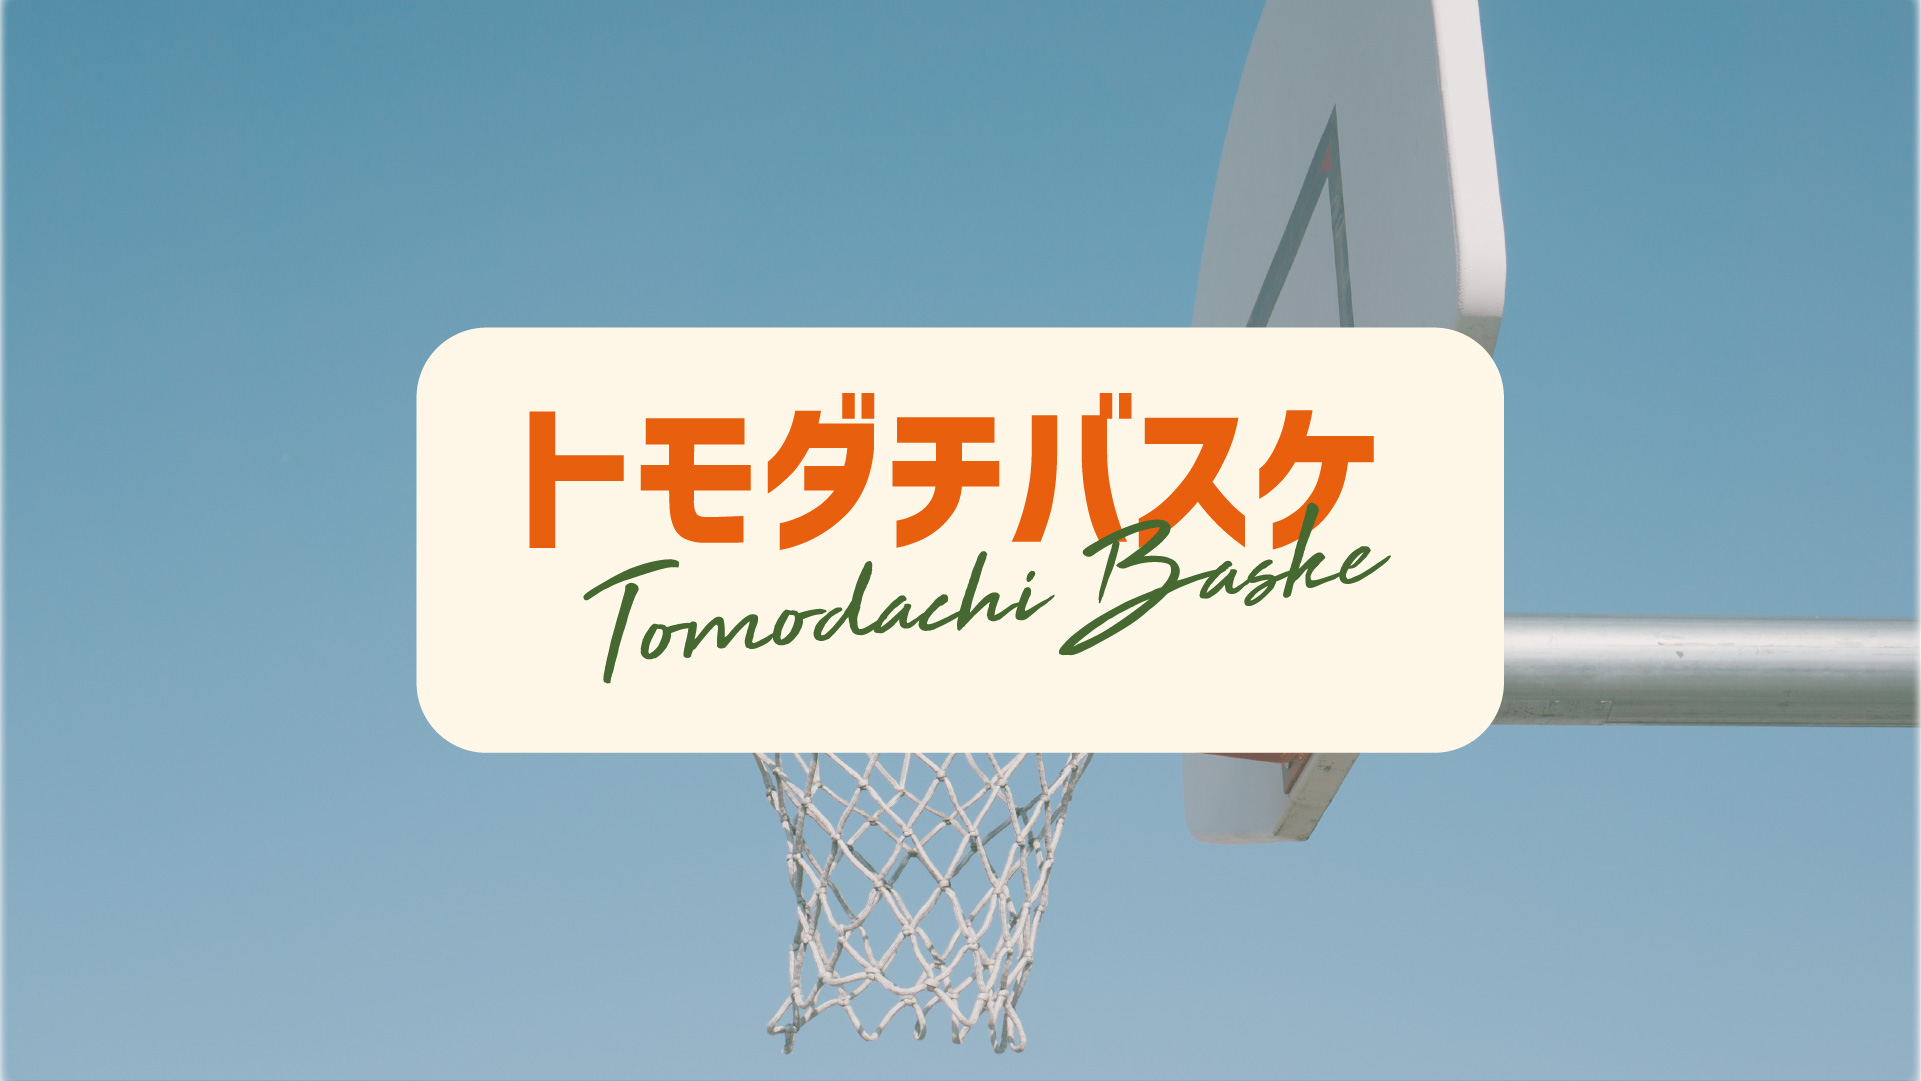 Featured image for “11/19 Tomodachi Basuketball”